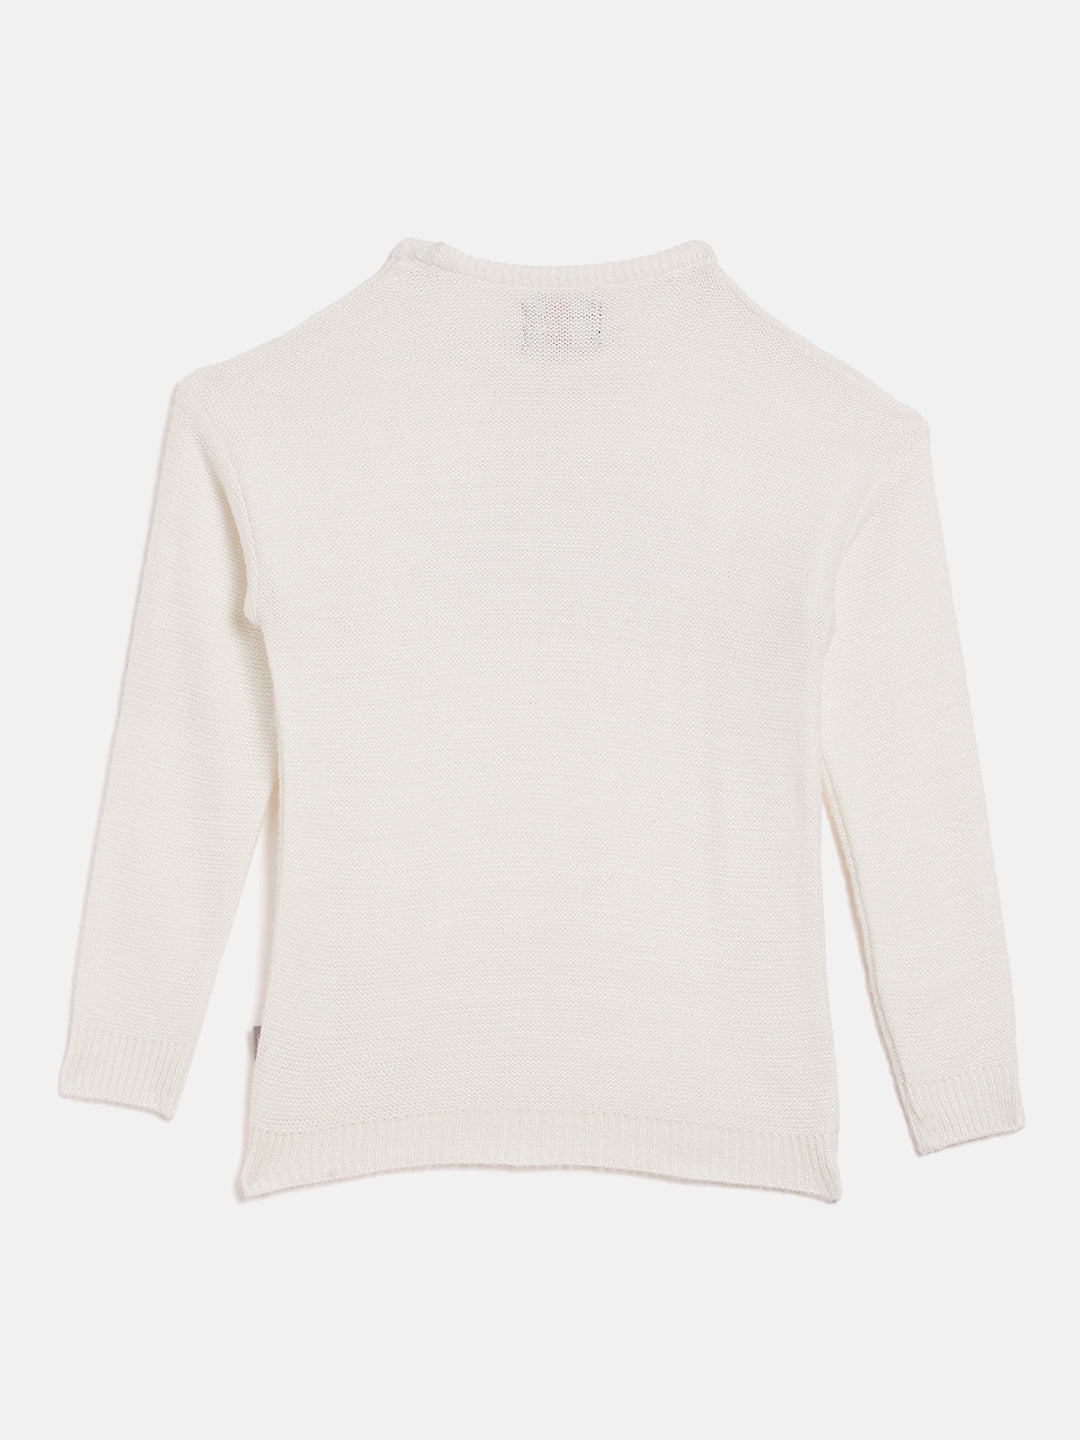 White Embellished Round Neck Sweater - Girls Sweaters